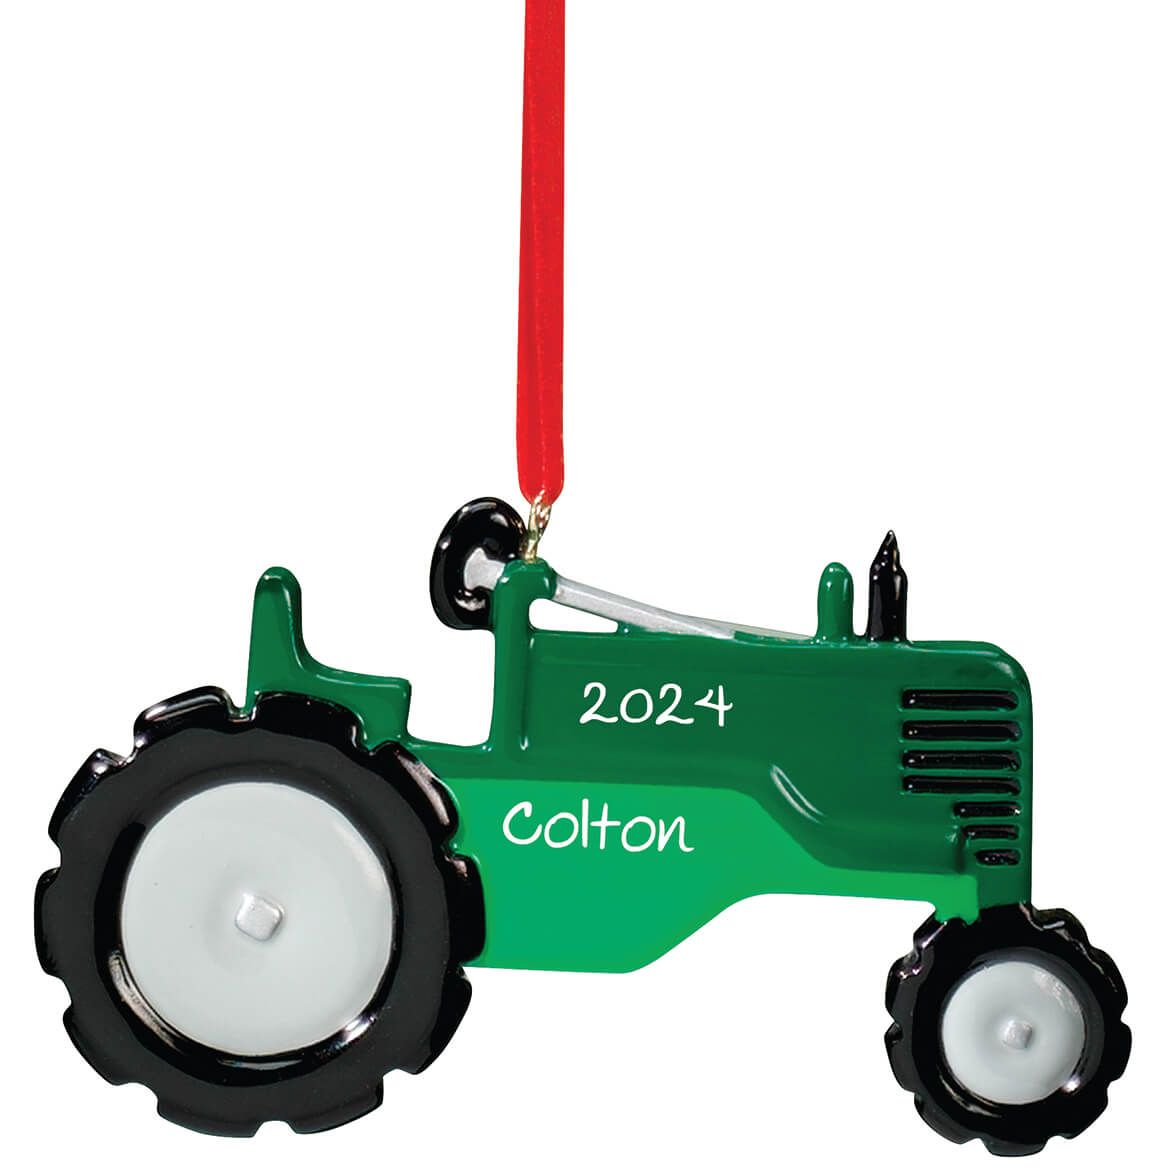 Personalized Tractor Ornament + '-' + 316697